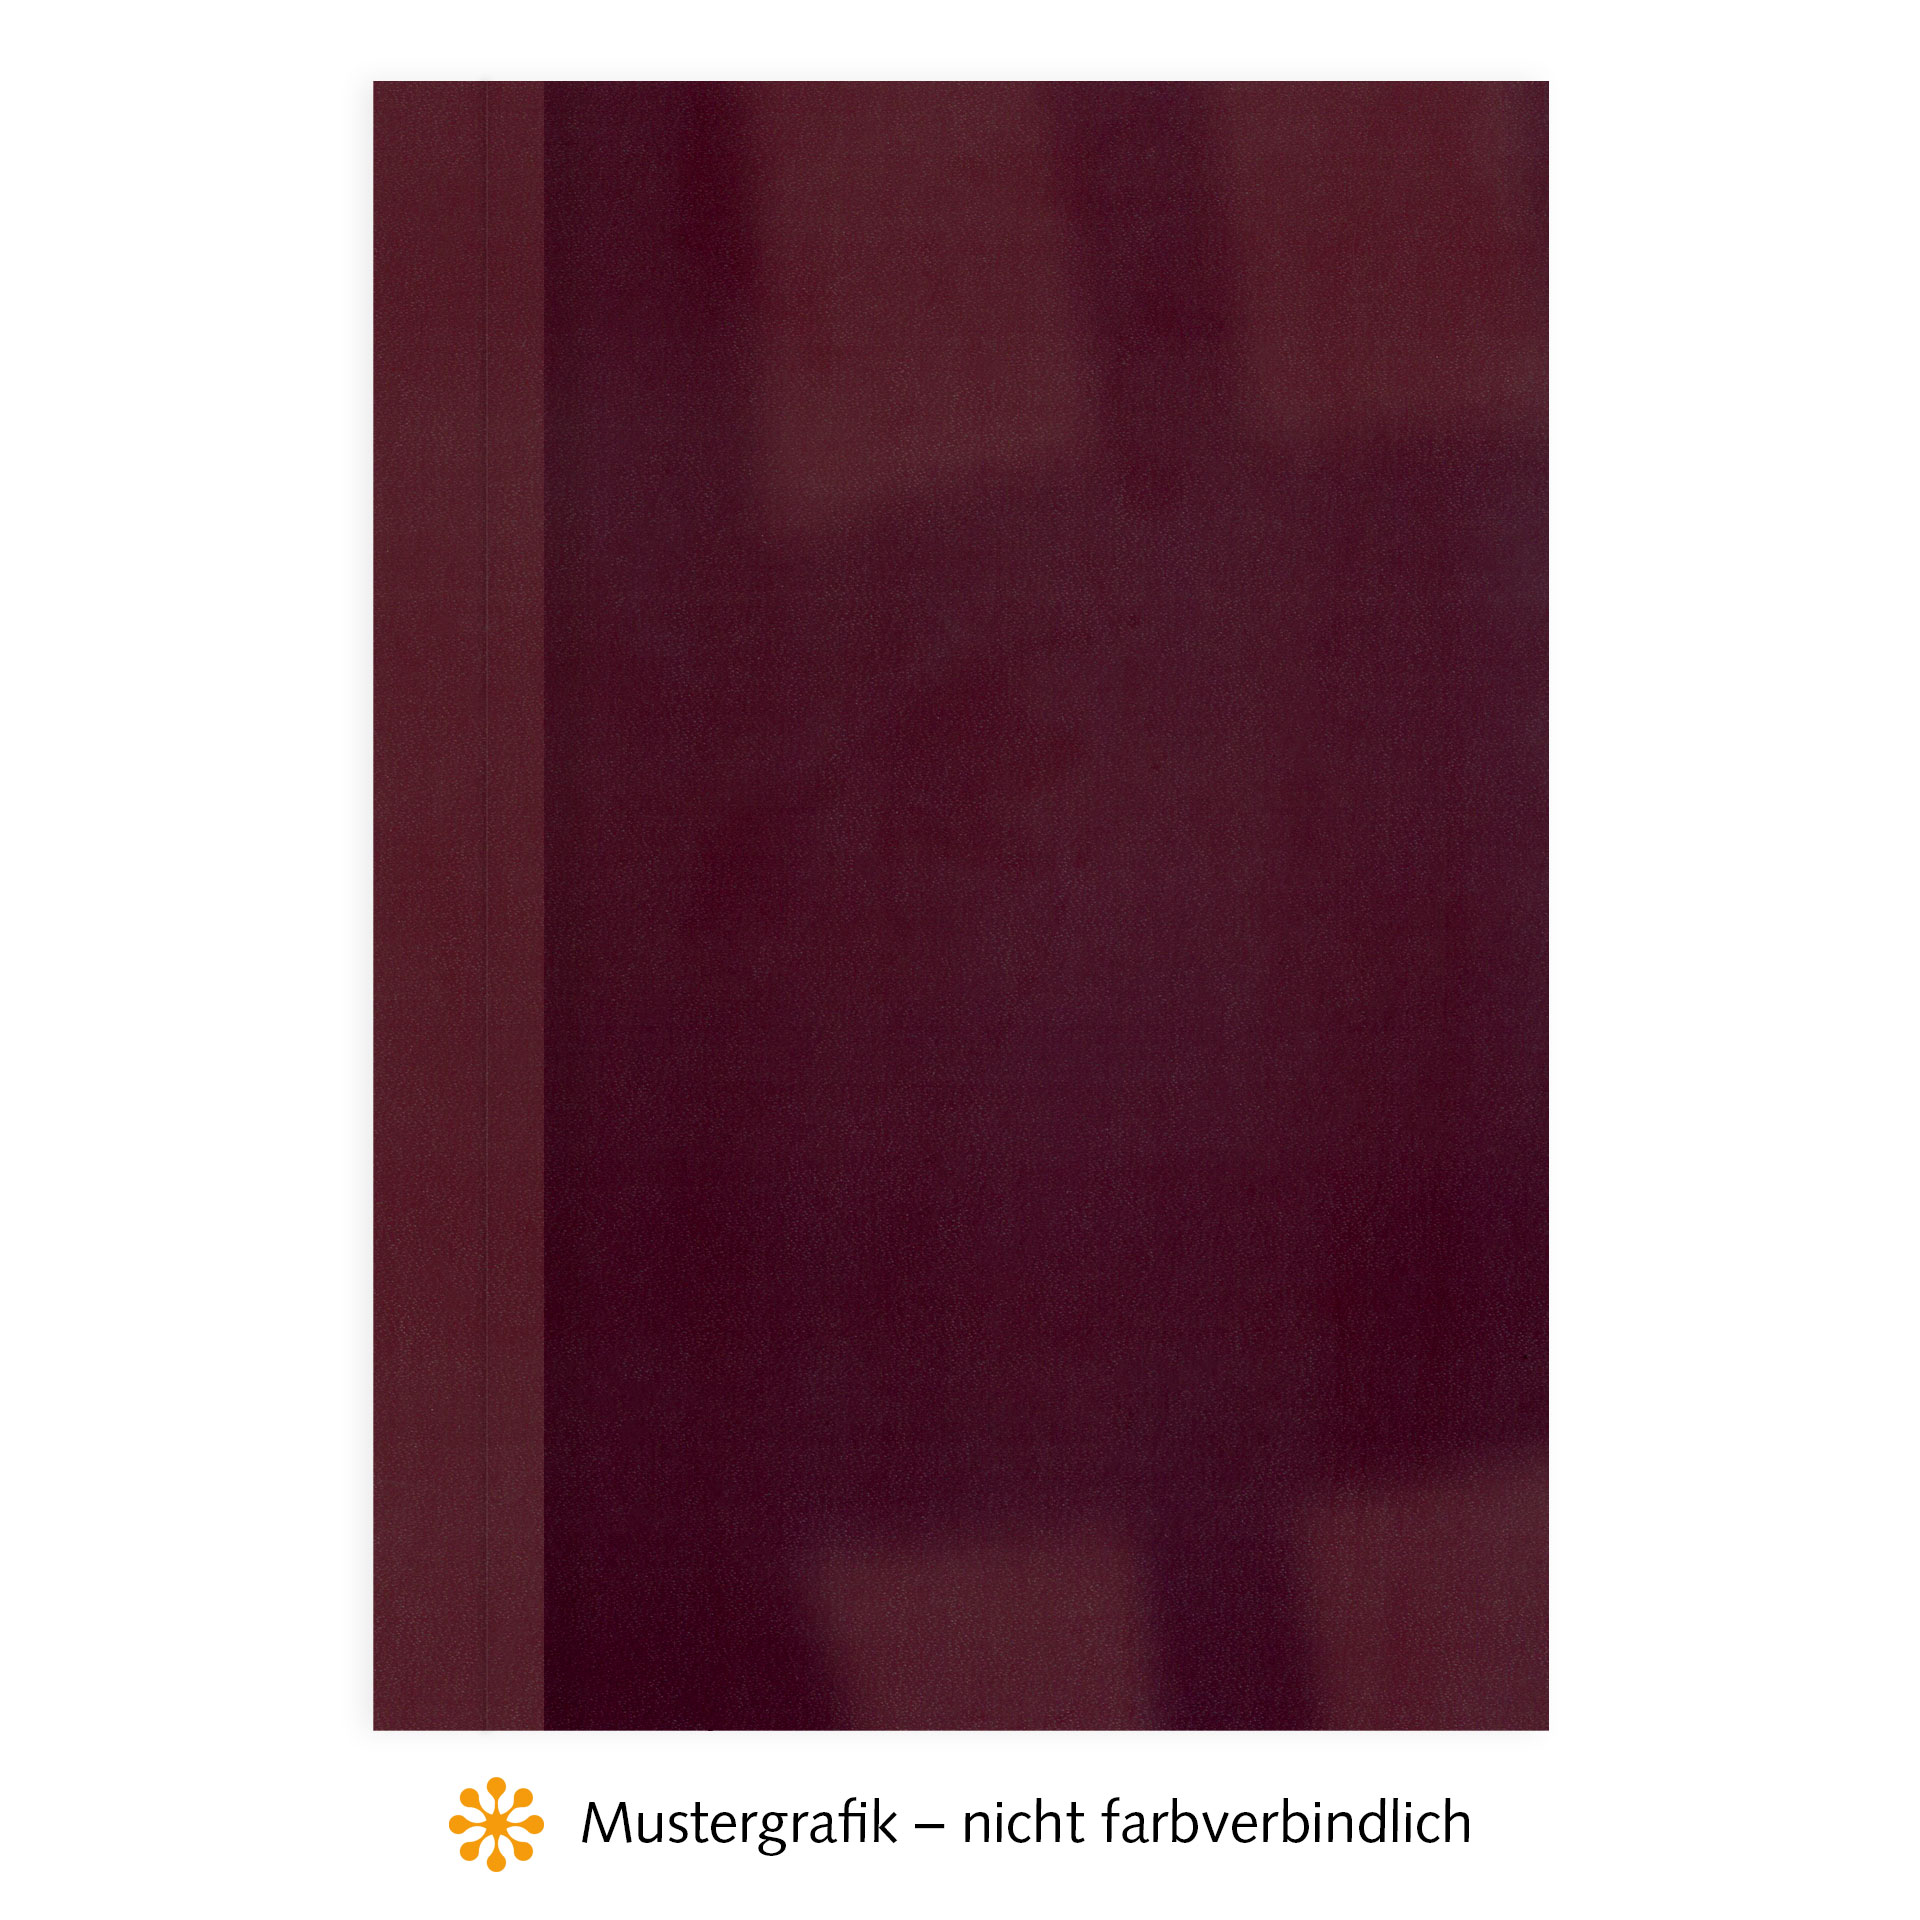 Ösenmappen DUO Cover, Vorderseite Folie KLAR transparent, Rückseite Karton Business / Nobless-Regence, Bordeaux, 10 mm, 91 bis 100 Blatt